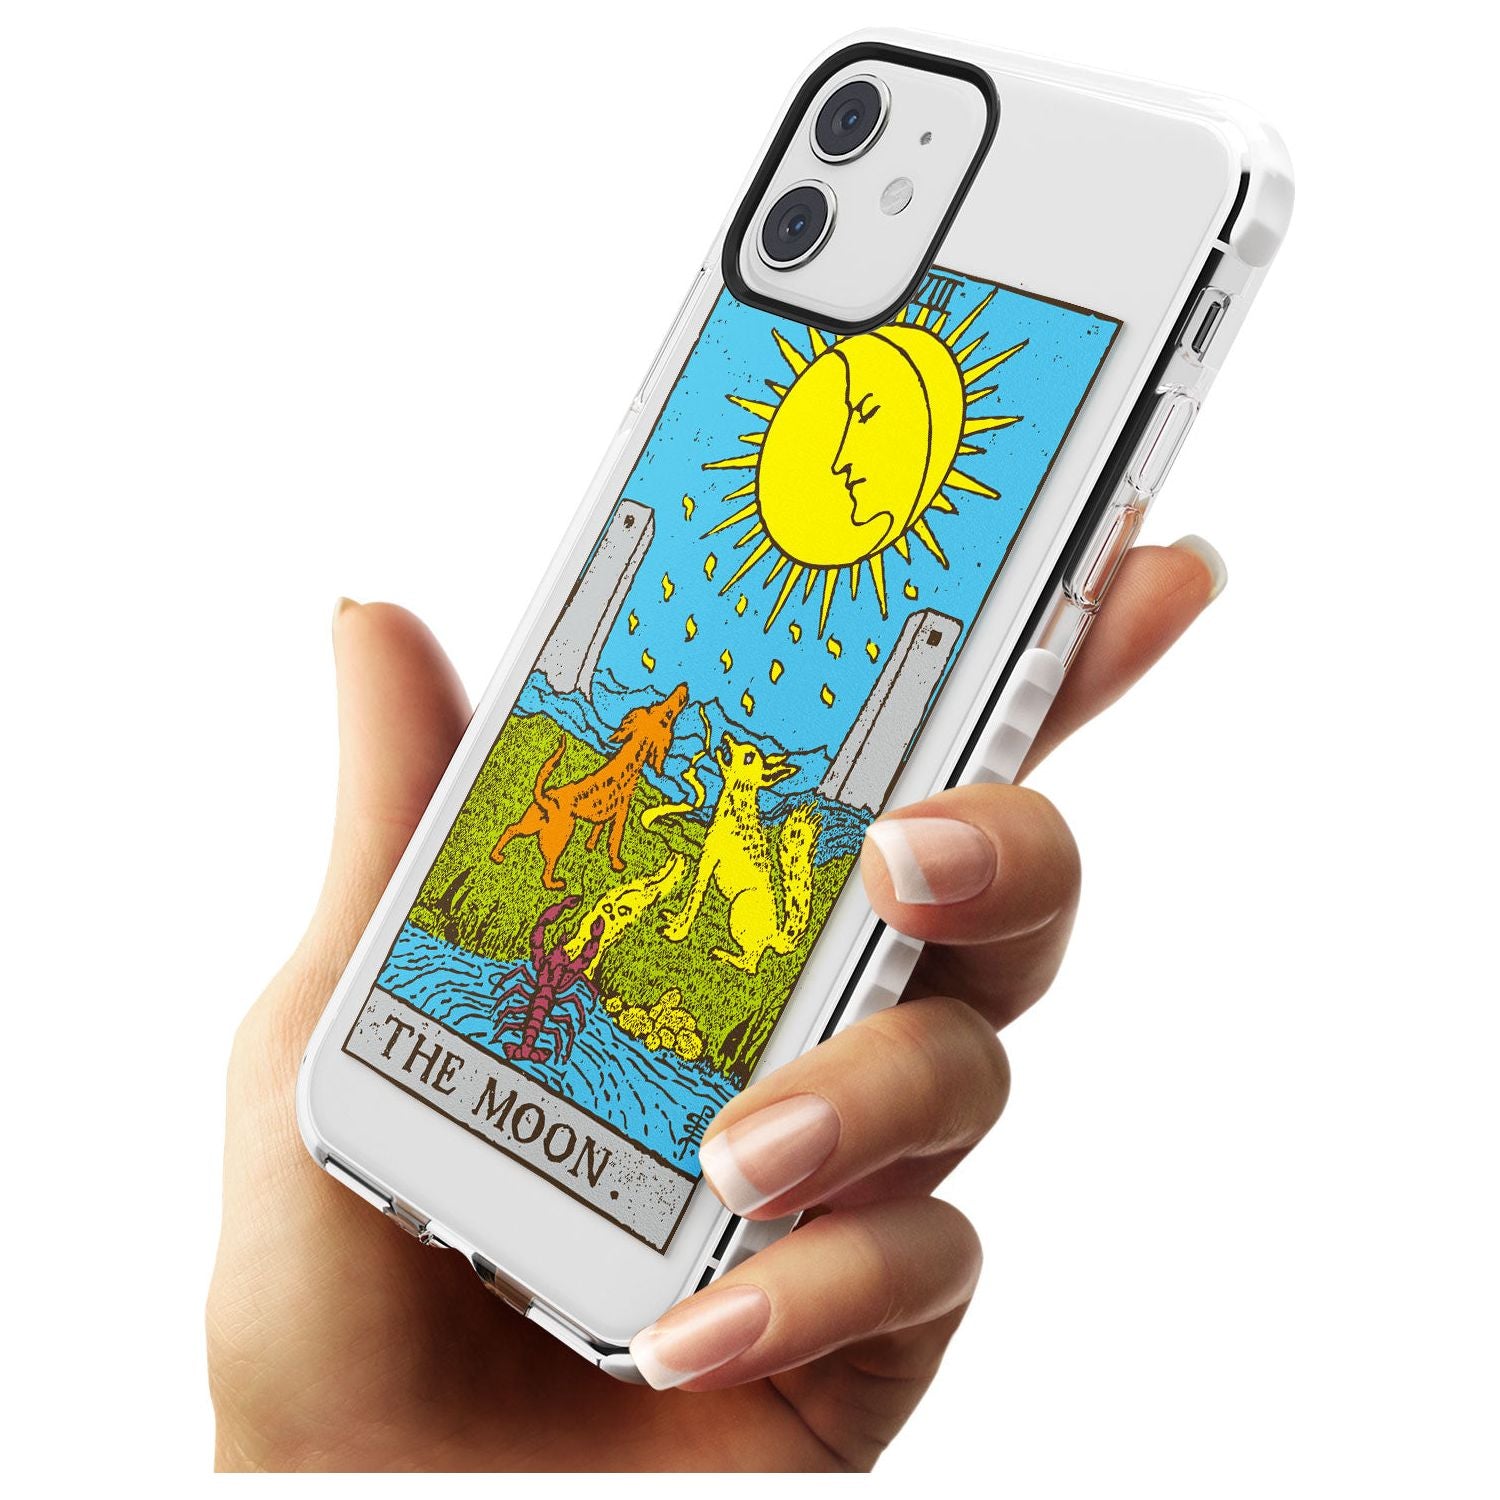 The Moon Tarot Card - Colour Slim TPU Phone Case for iPhone 11